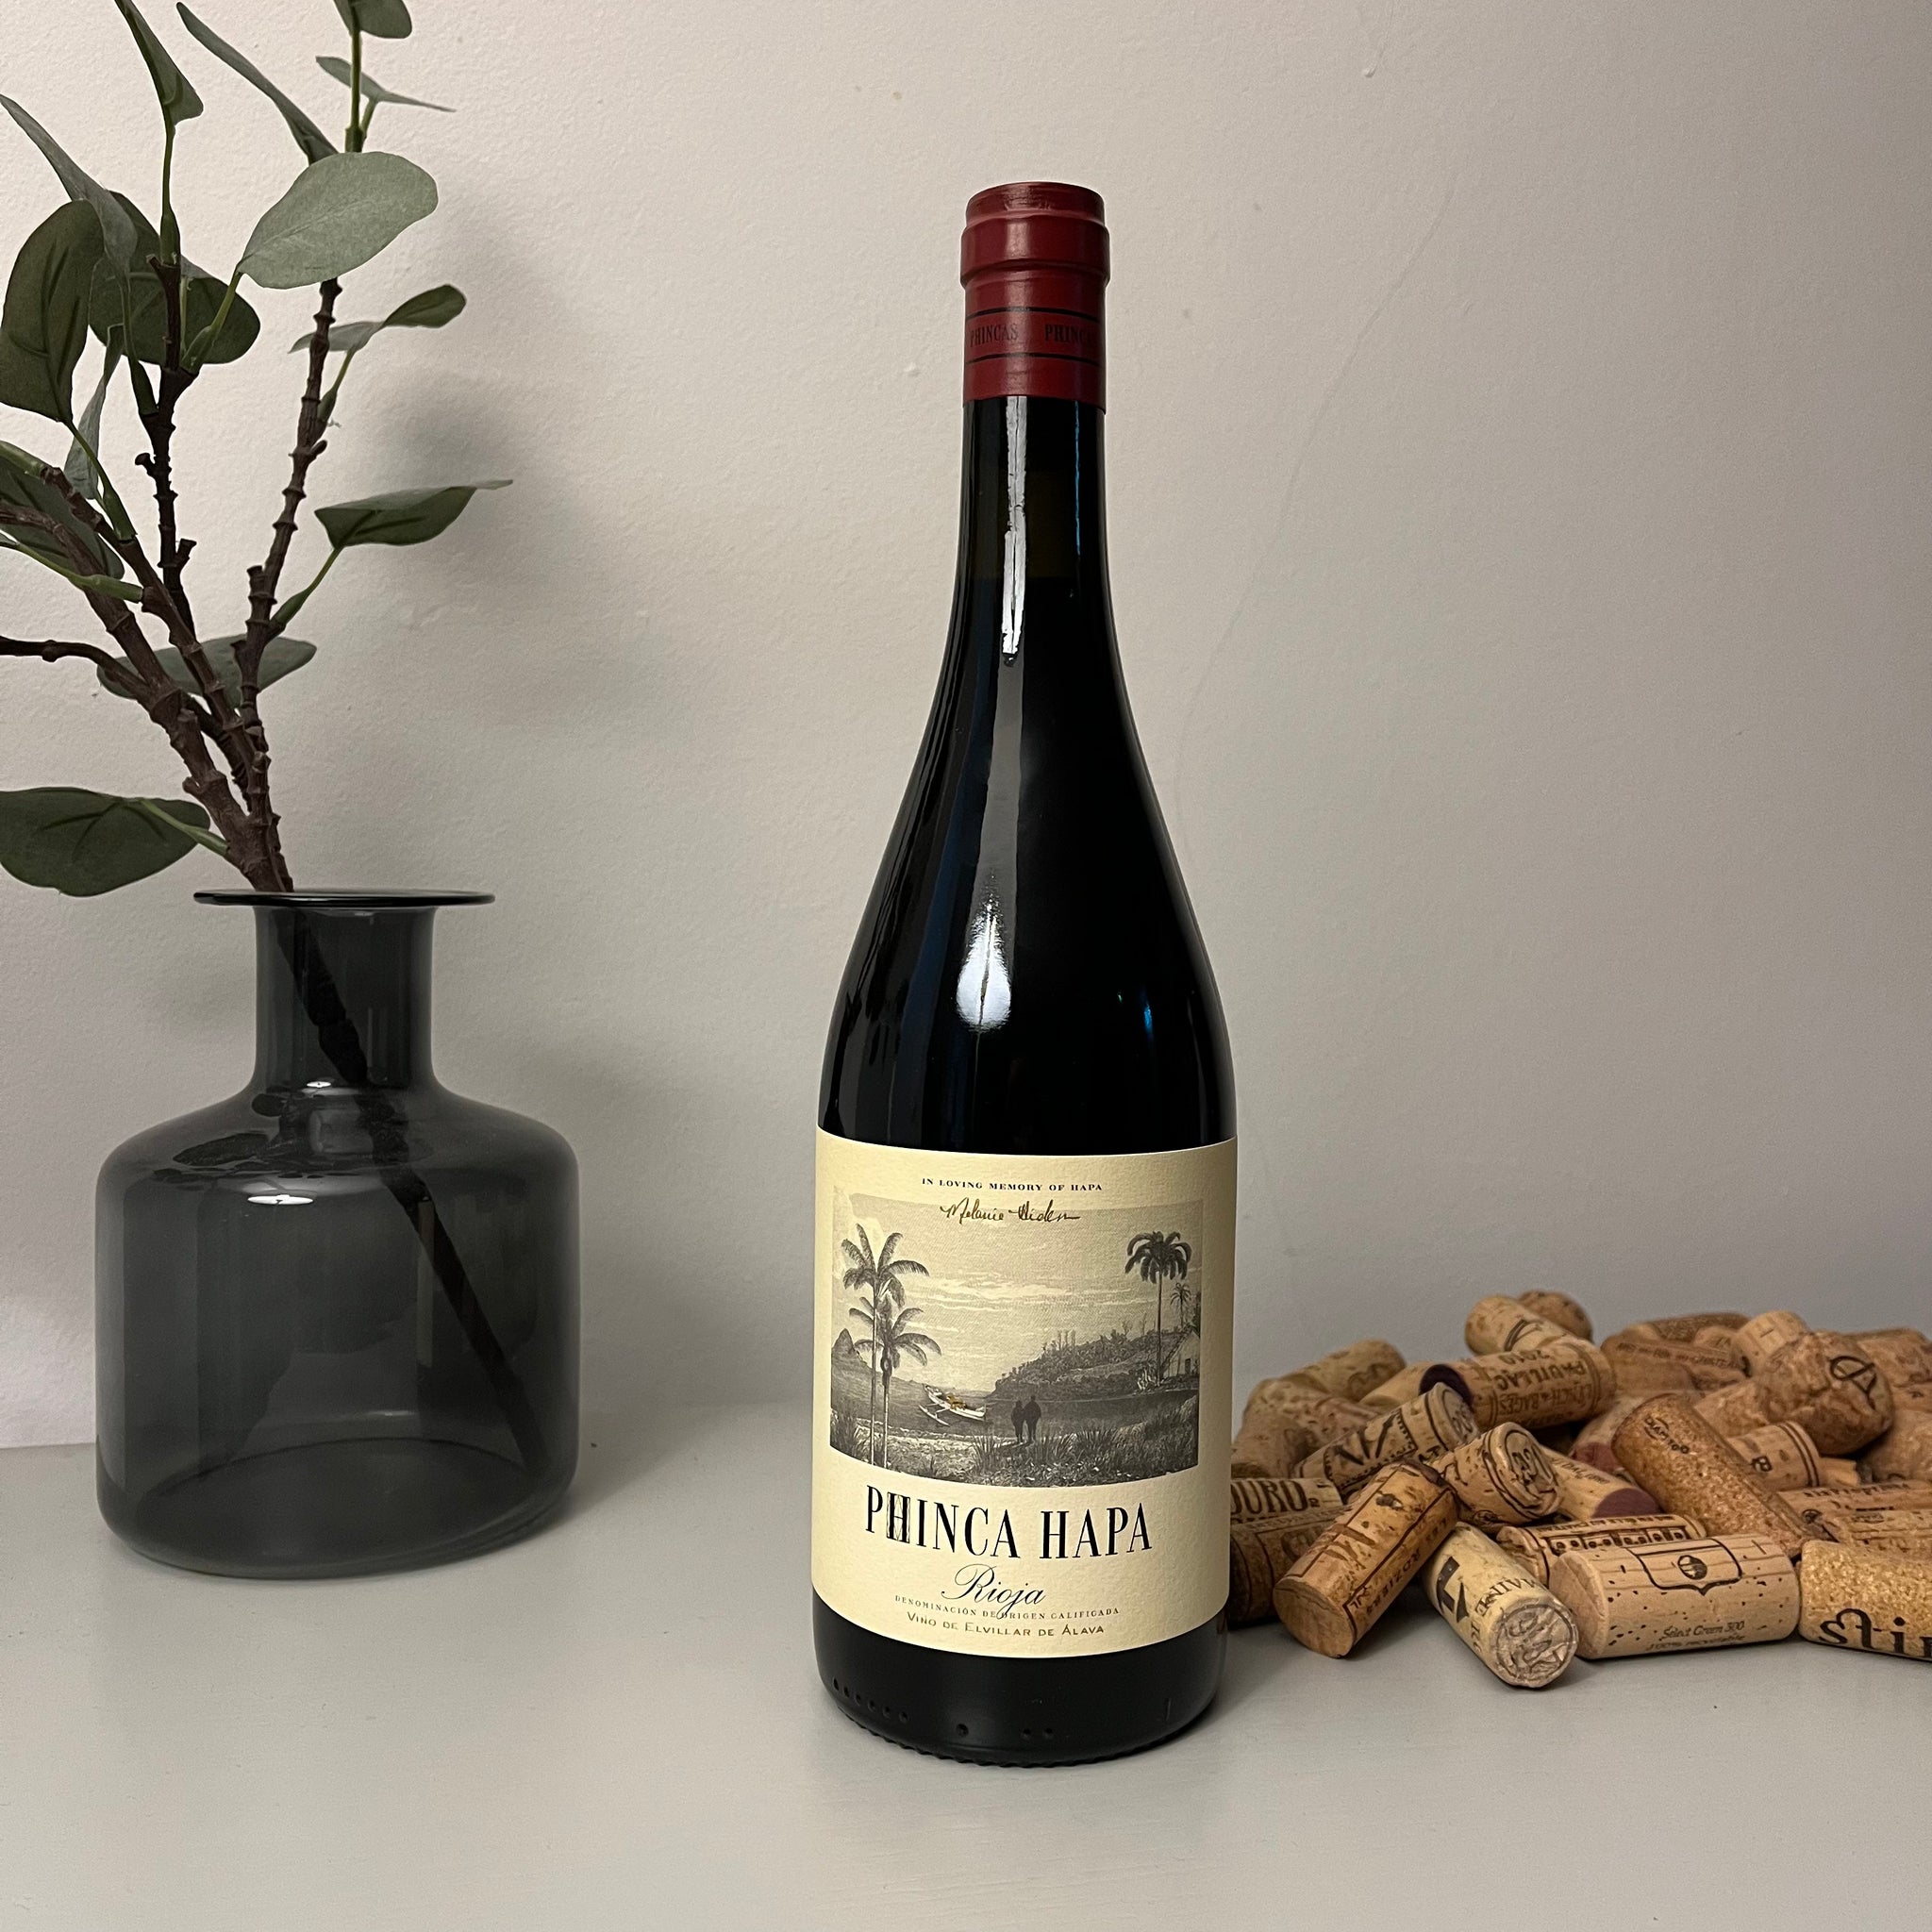 Struggling Vines, Phinca Hapa Tinto, Rioja Alavesa, 2018